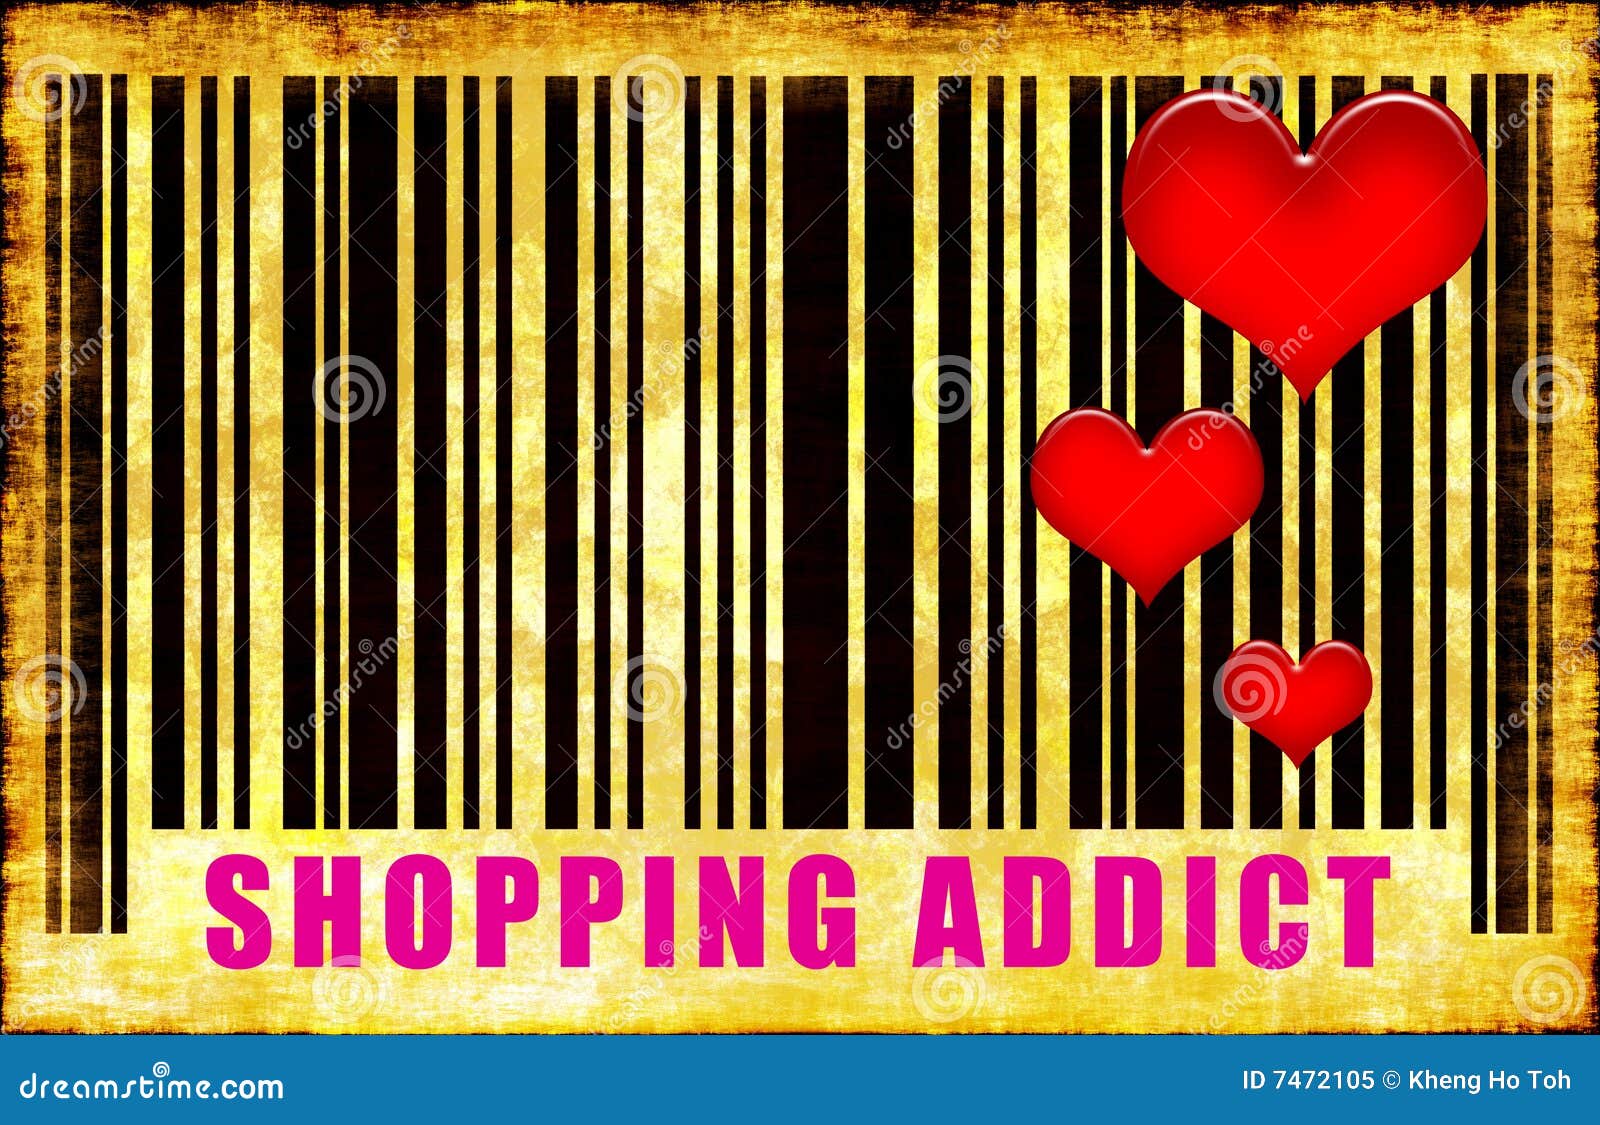 shopping addict